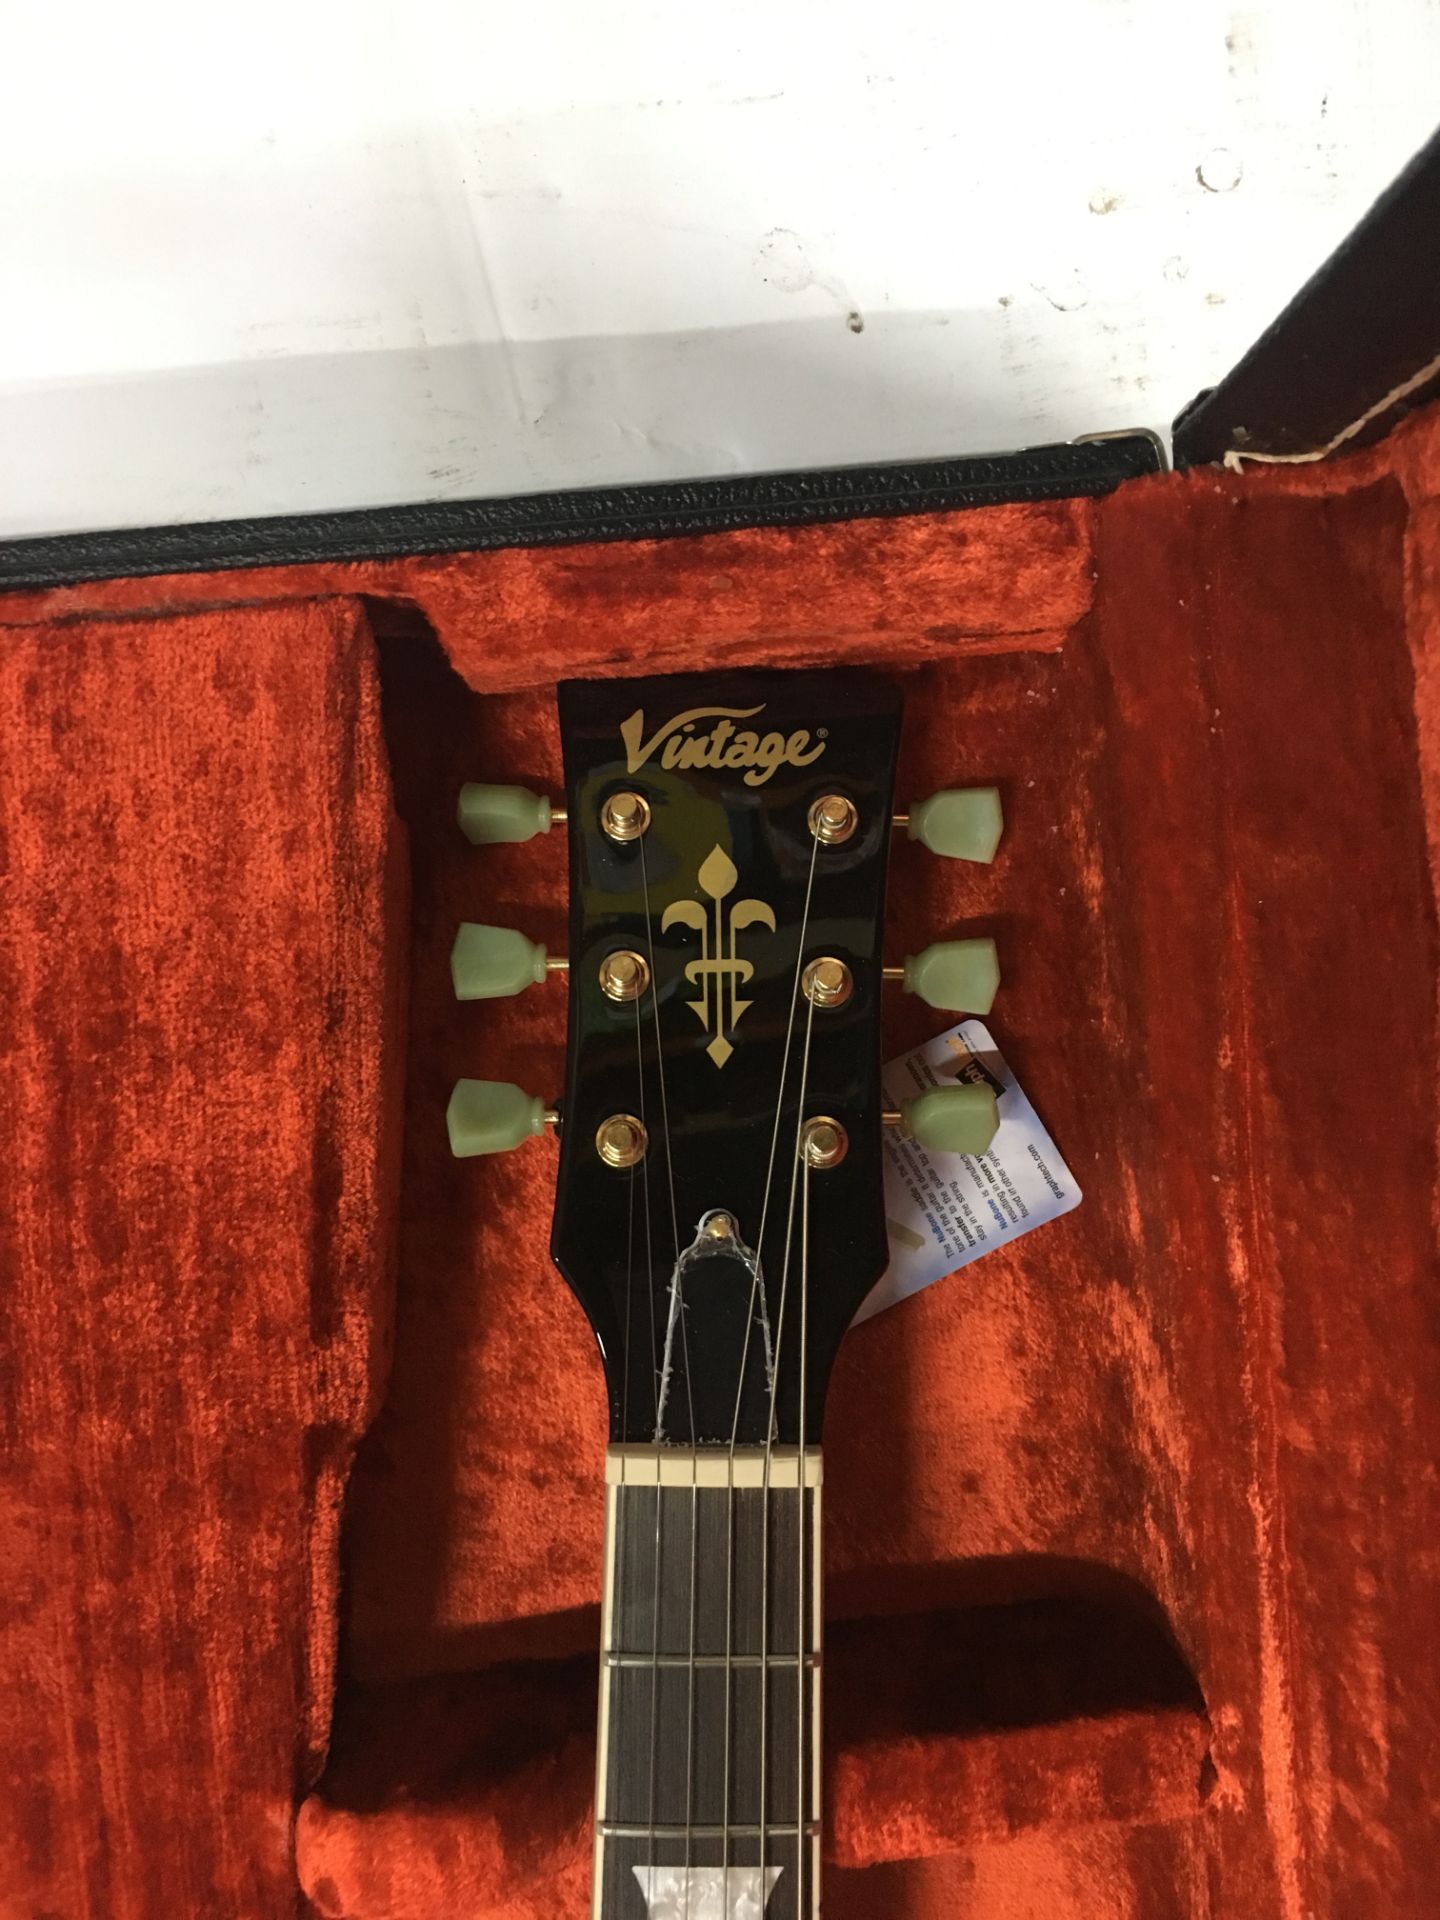 Vintage V100 Left Handed Electric Guitar | New | In Case | RRP £349 - Image 3 of 3